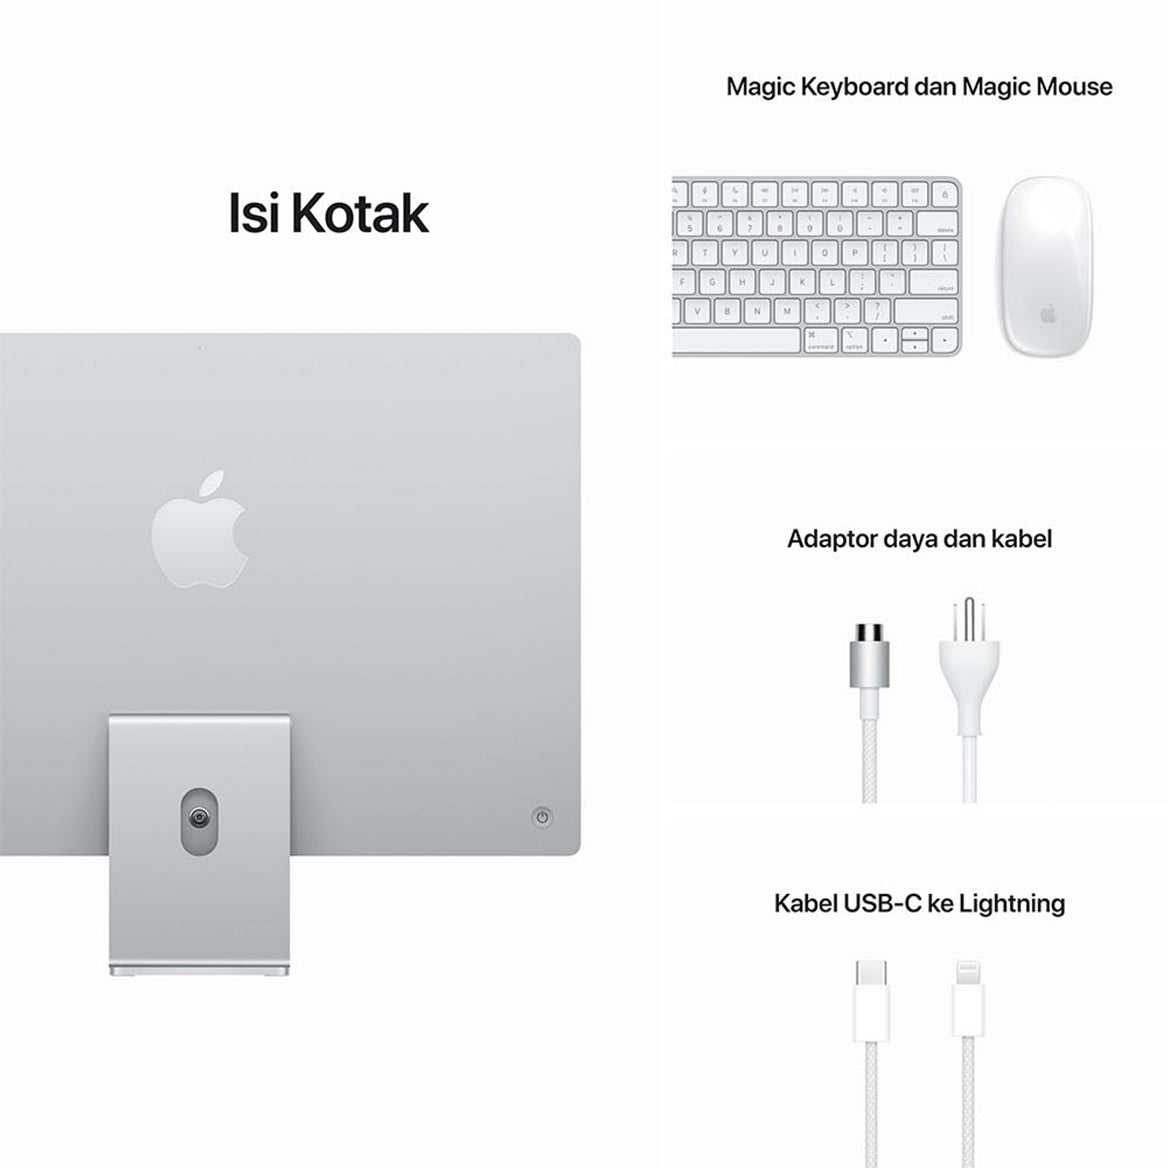 24-inch iMac with Retina 4.5K display: Apple M1 chip with 8‑core CPU and 8‑core GPU